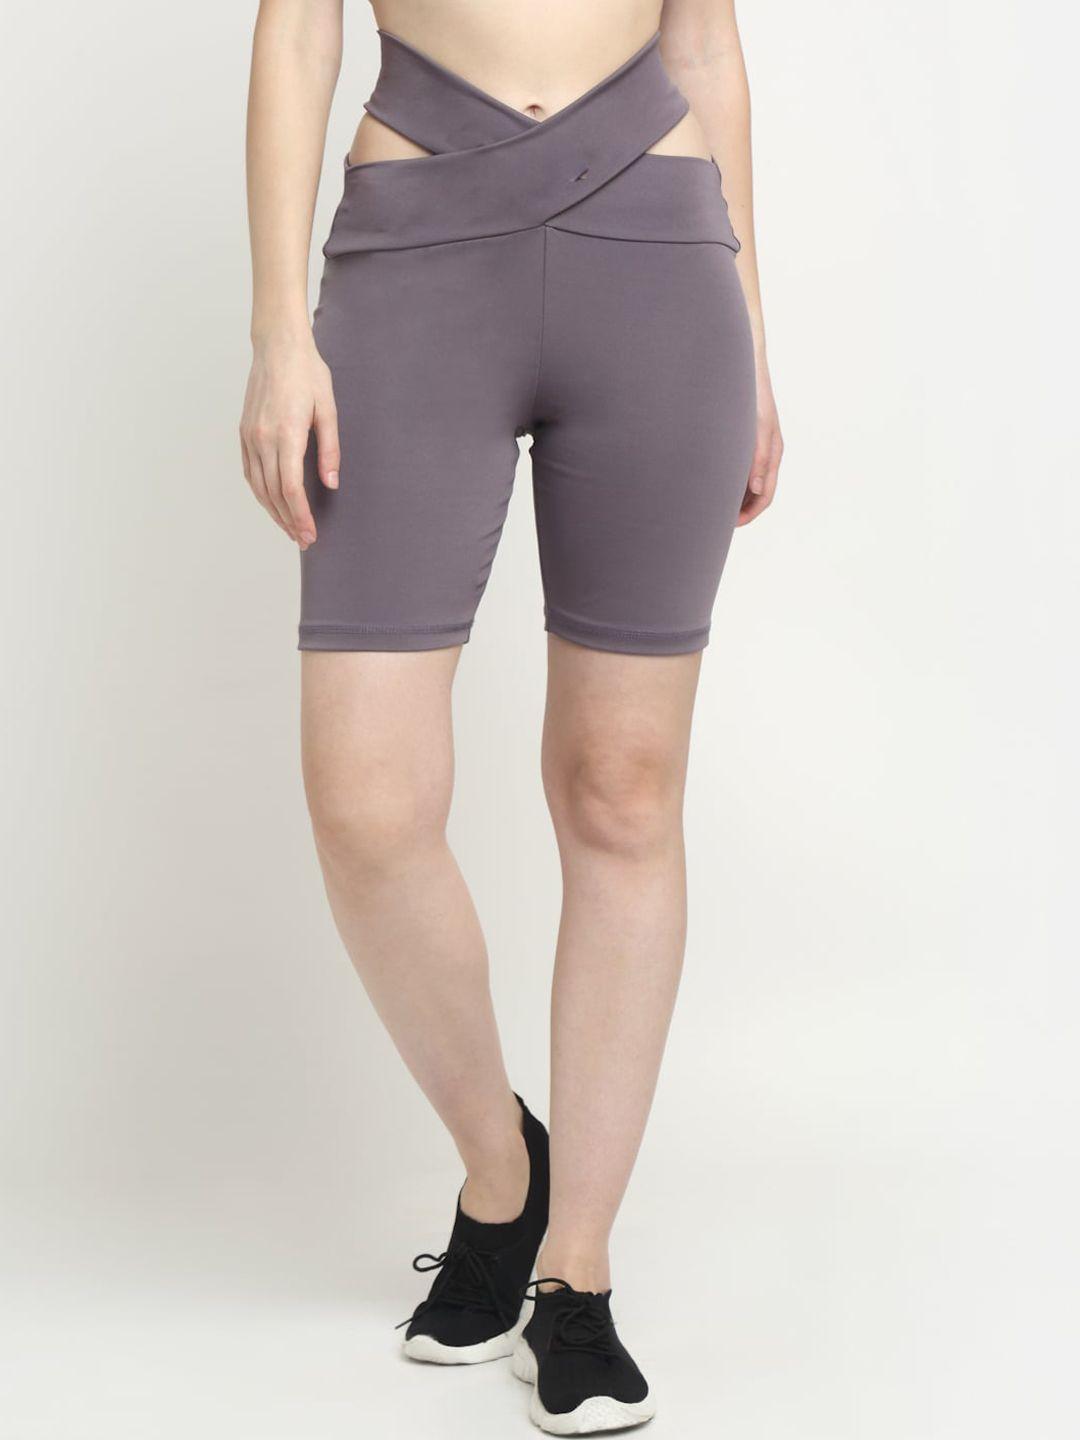 everdion women lavender slim fit high-rise training or gym sports shorts